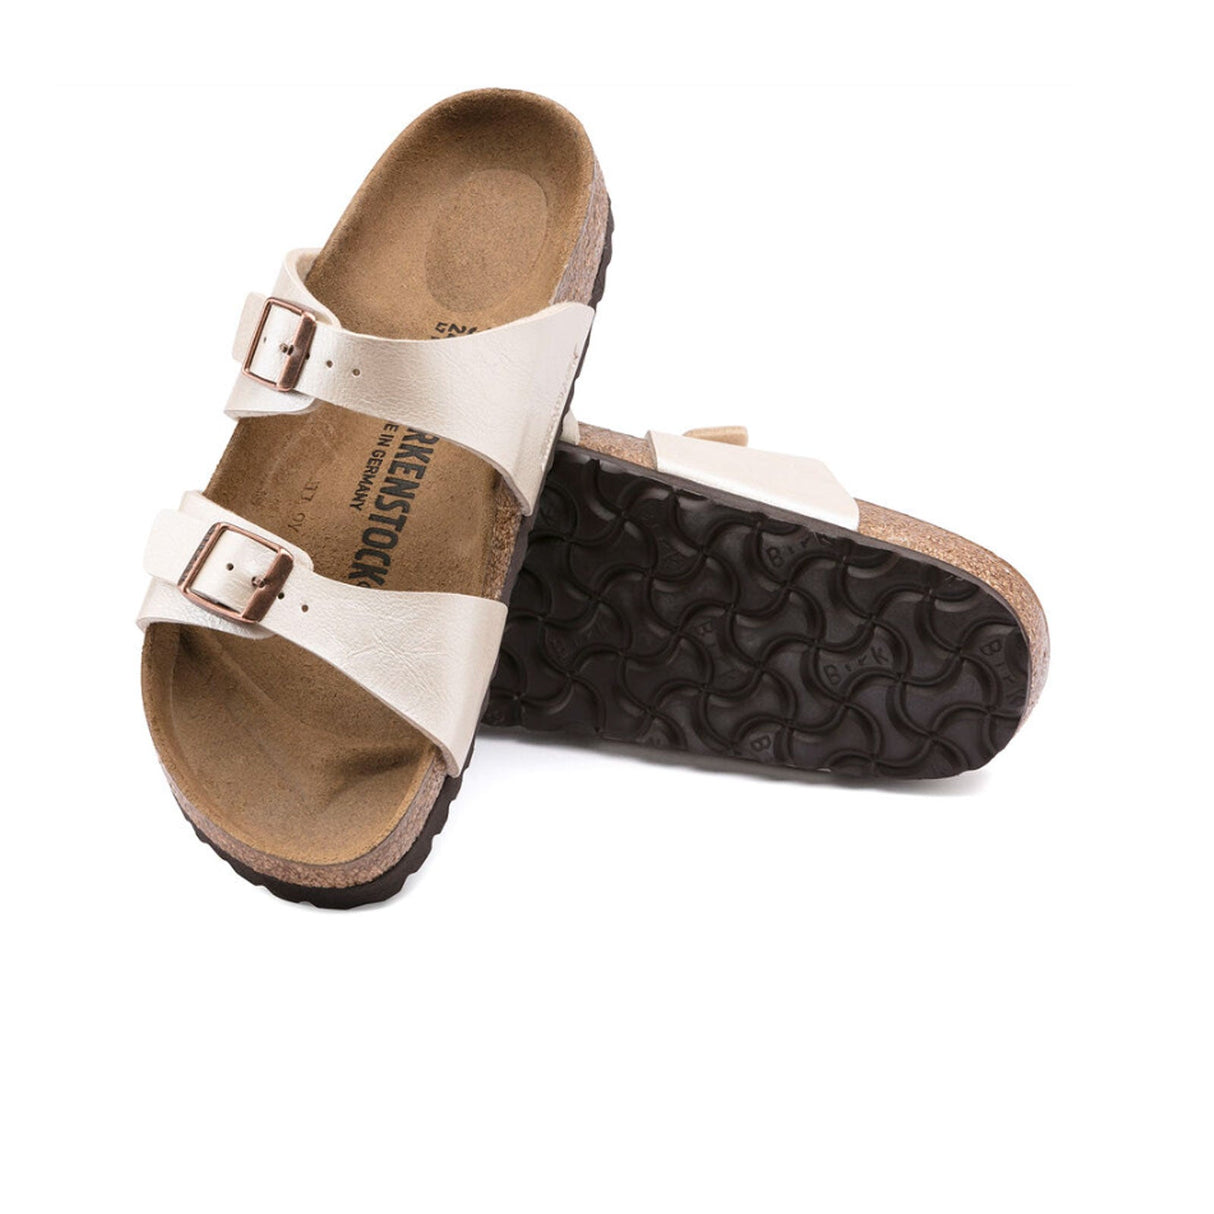 Birkenstock Sydney Narrow Slide Sandal (Women) - Graceful Pearl White Sandals - Slide - The Heel Shoe Fitters